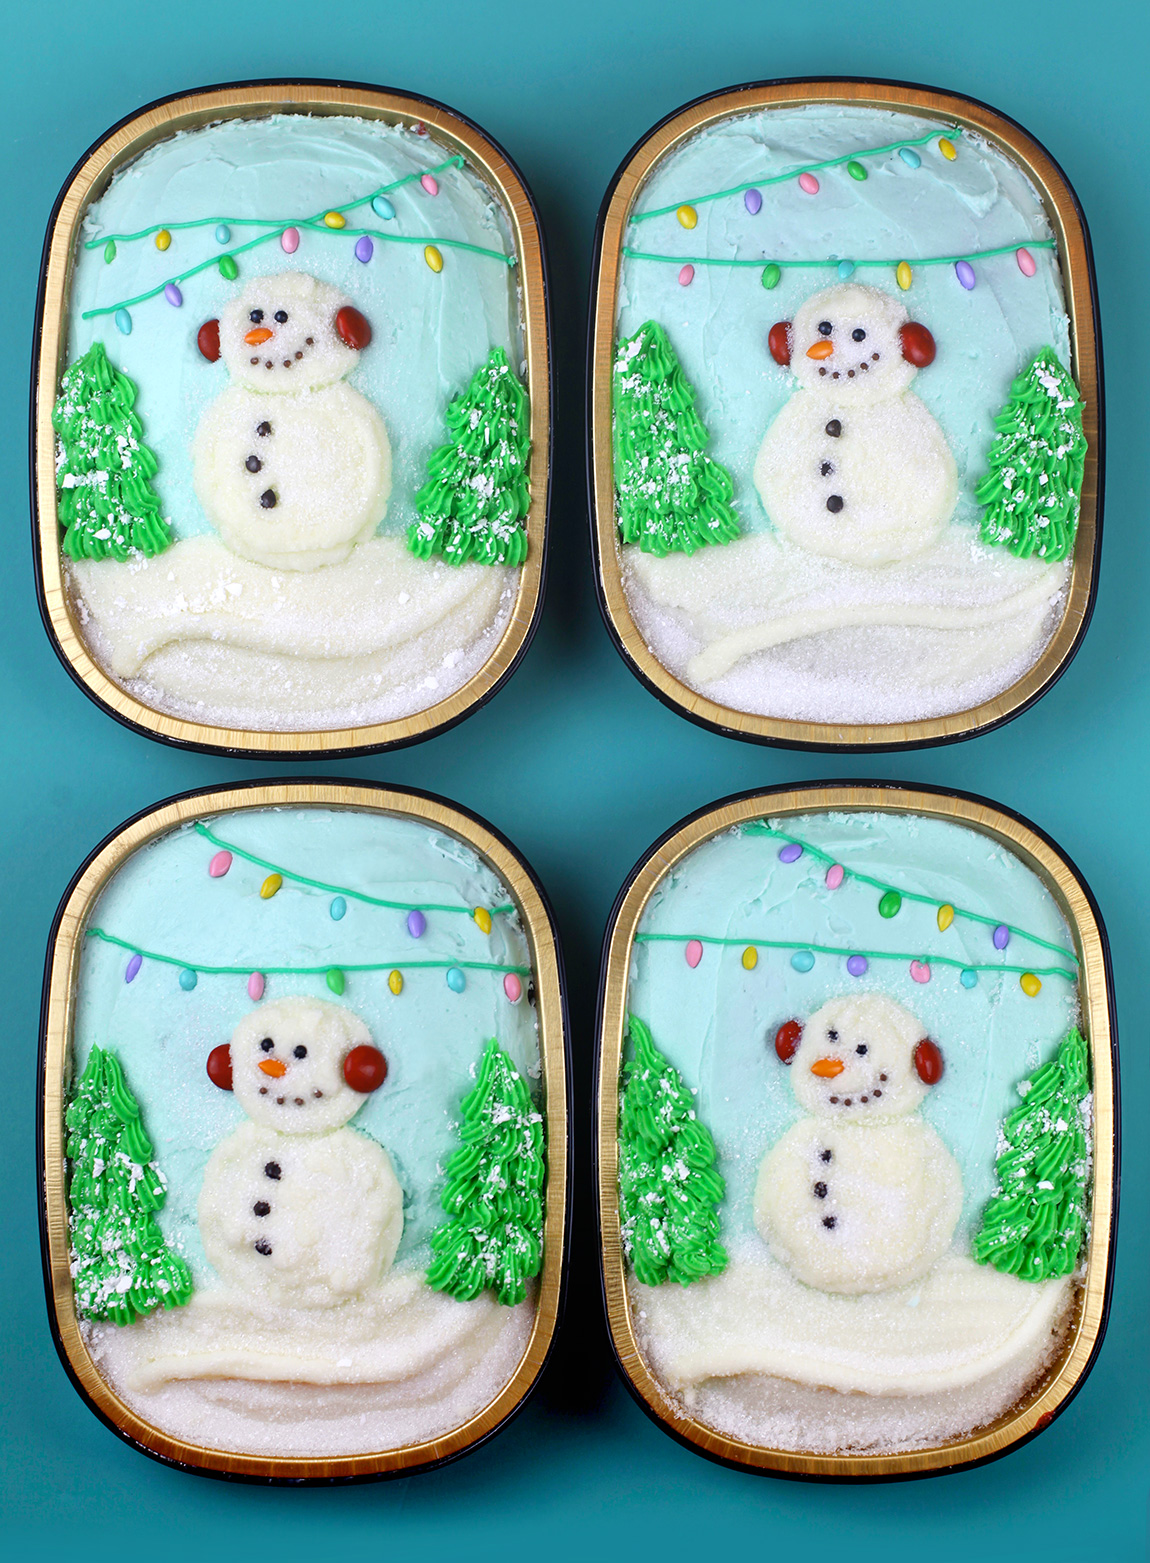 Snowman Snack Cakes